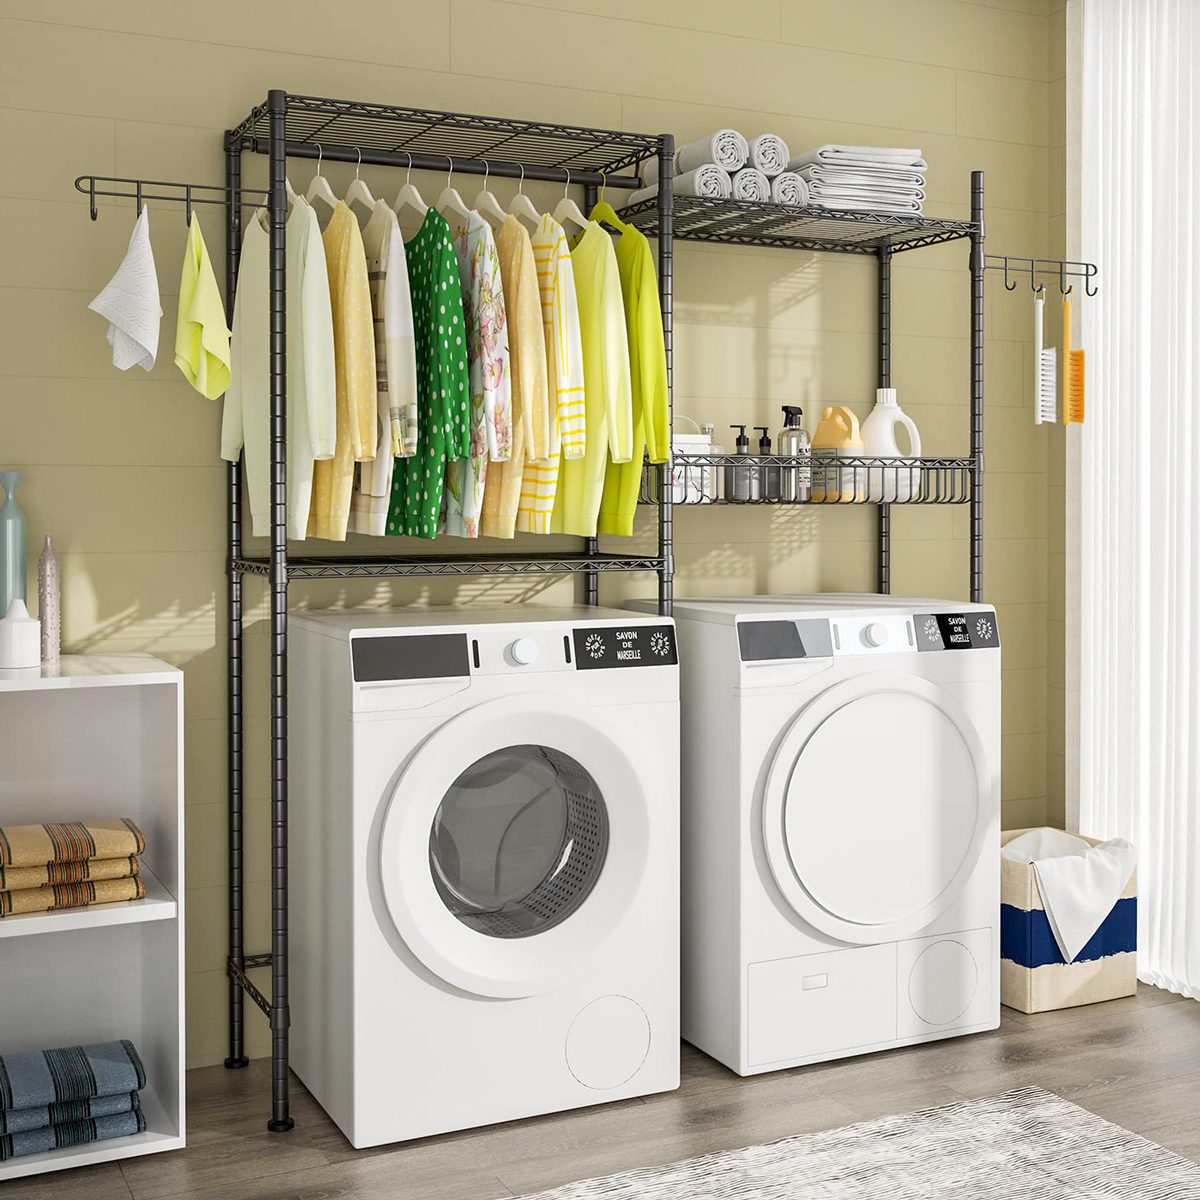 Laundry Room Shelving - Ideas for Laundry Shelving & Laundry